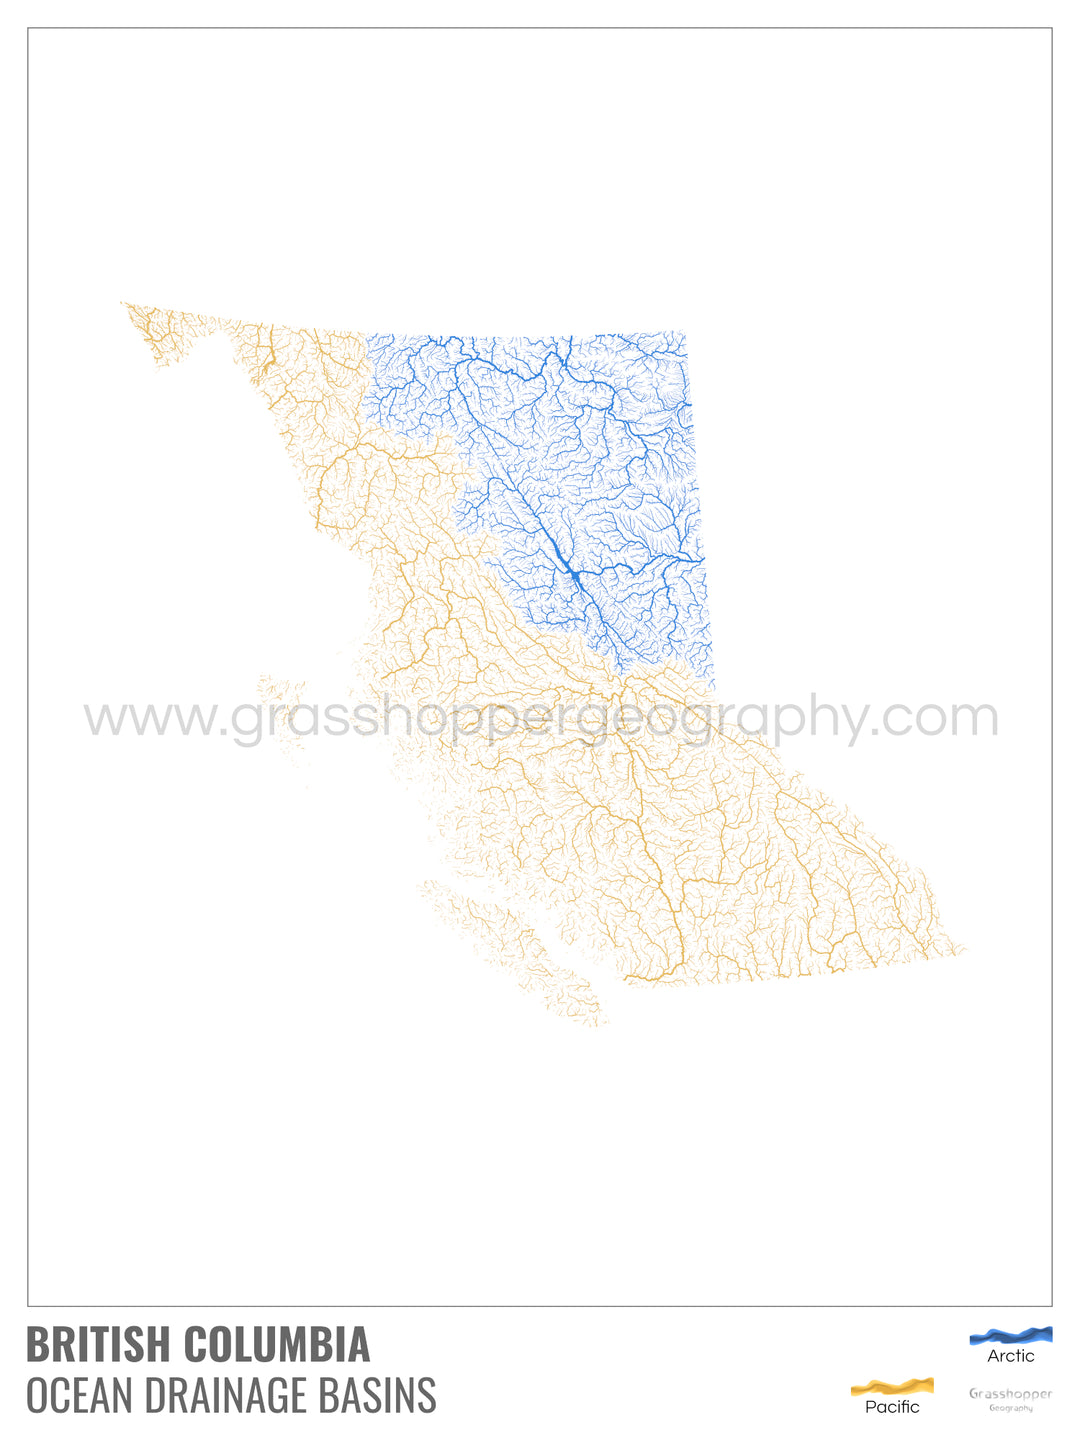 British Columbia - Ocean drainage basin map, white with legend v1 - Photo Art Print